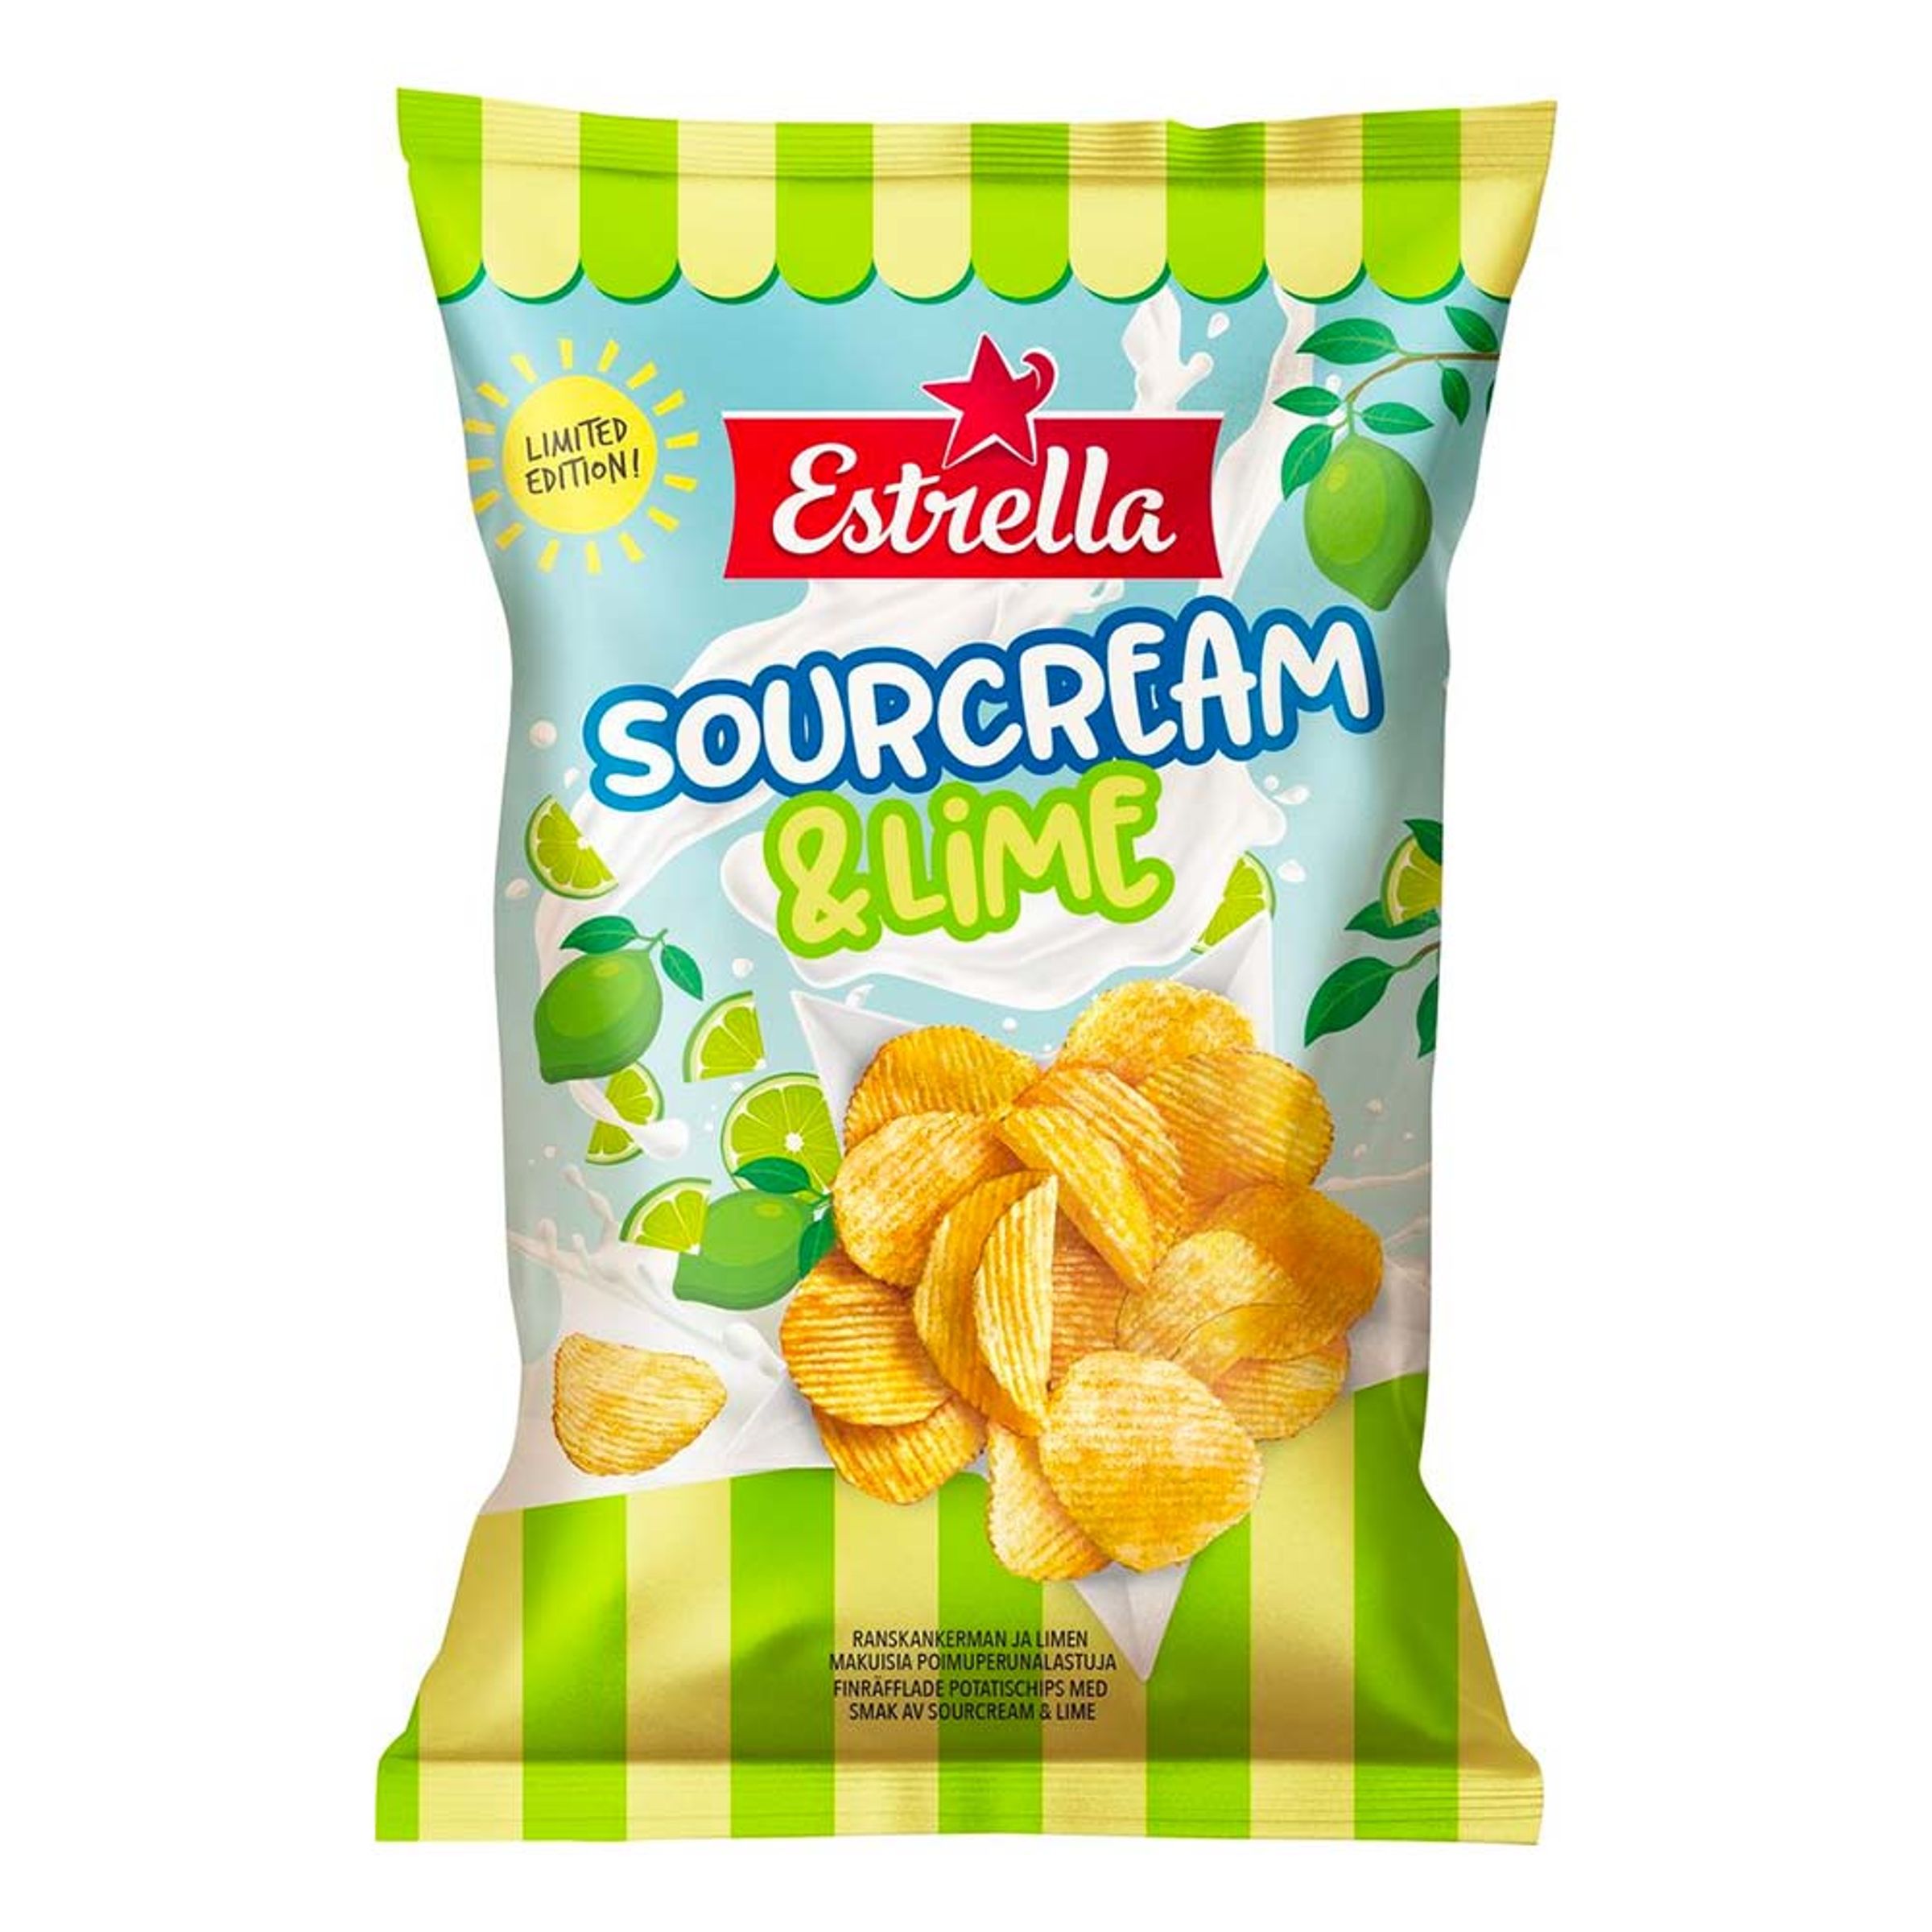 Estrella Sourcream & Lime Limited Edition - 160 gram